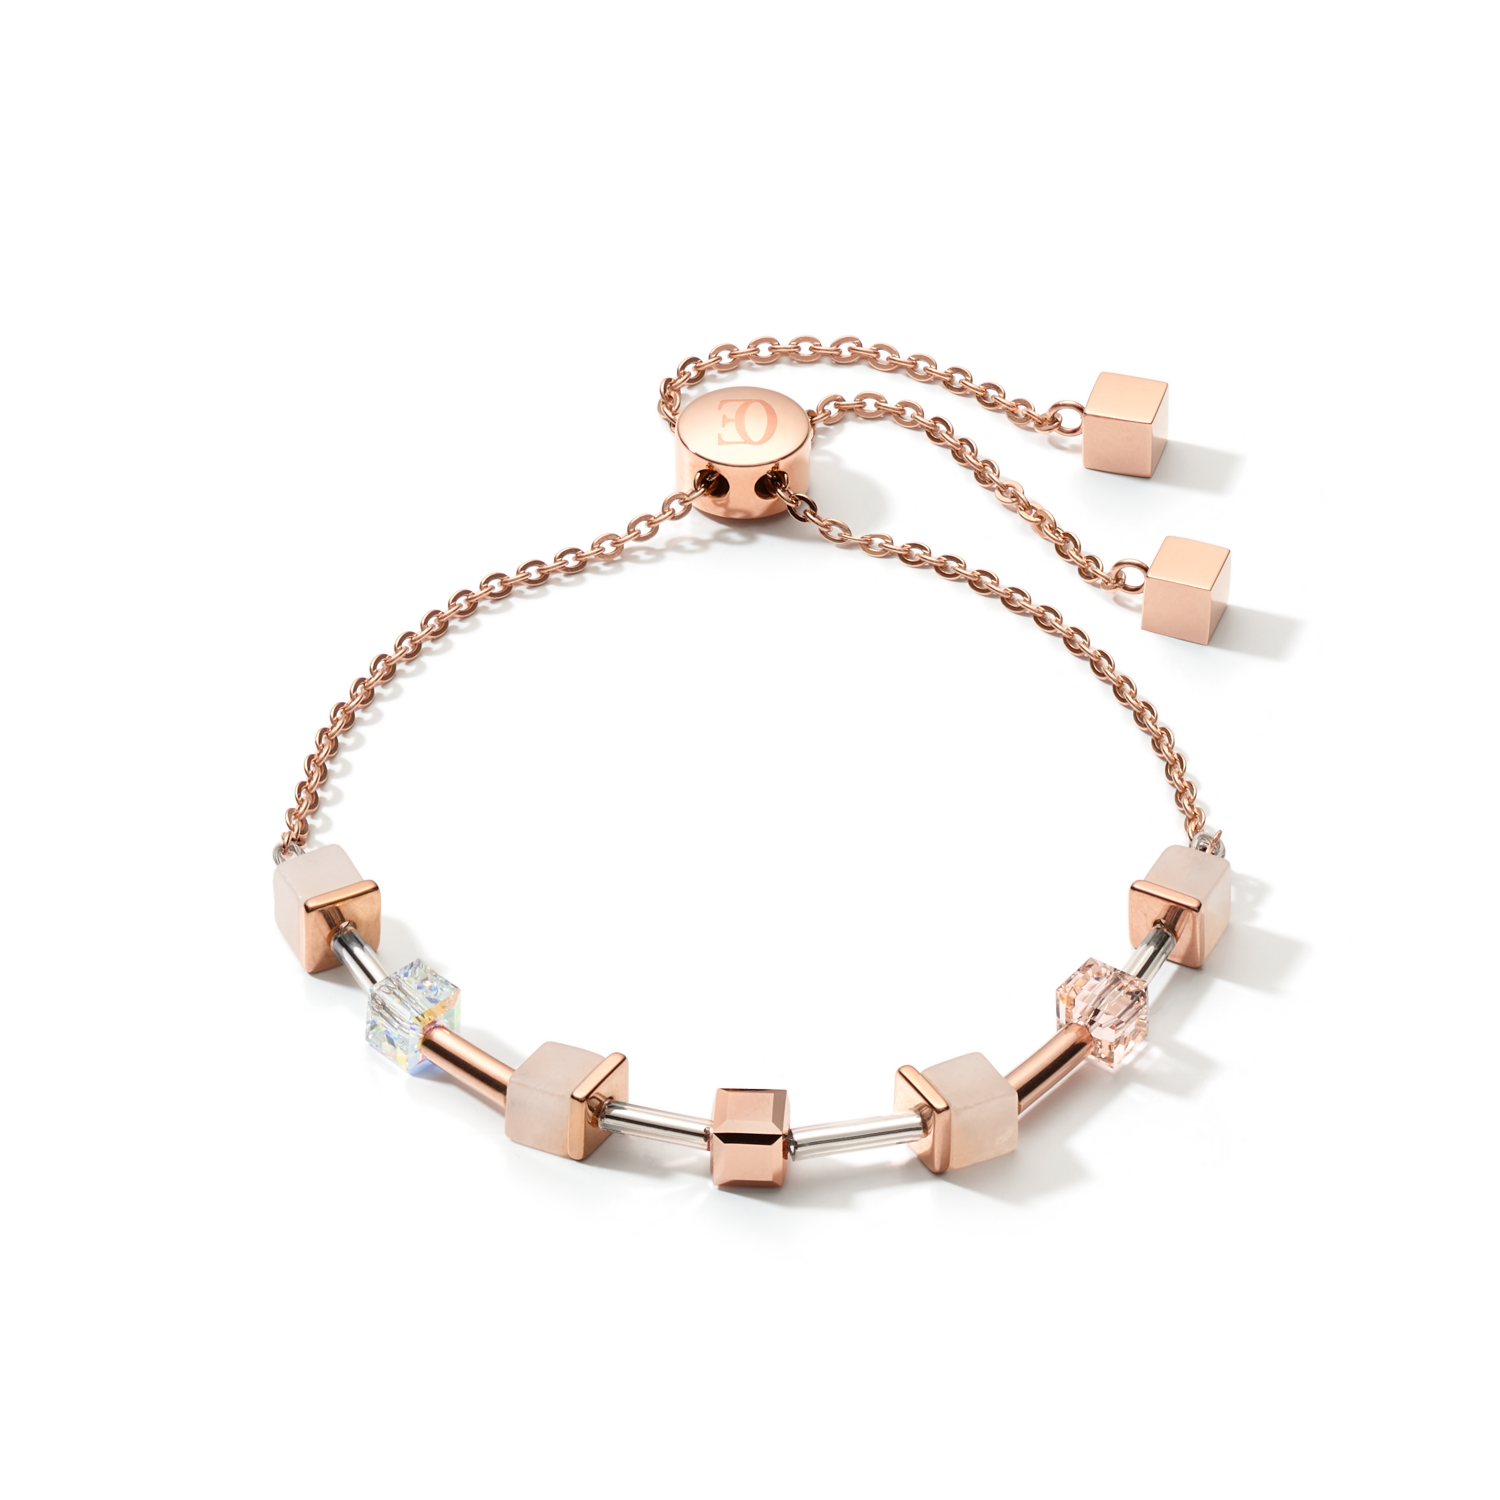 Bracelet GeoCUBE® aventurine rose chaîne délicate or rose pêche